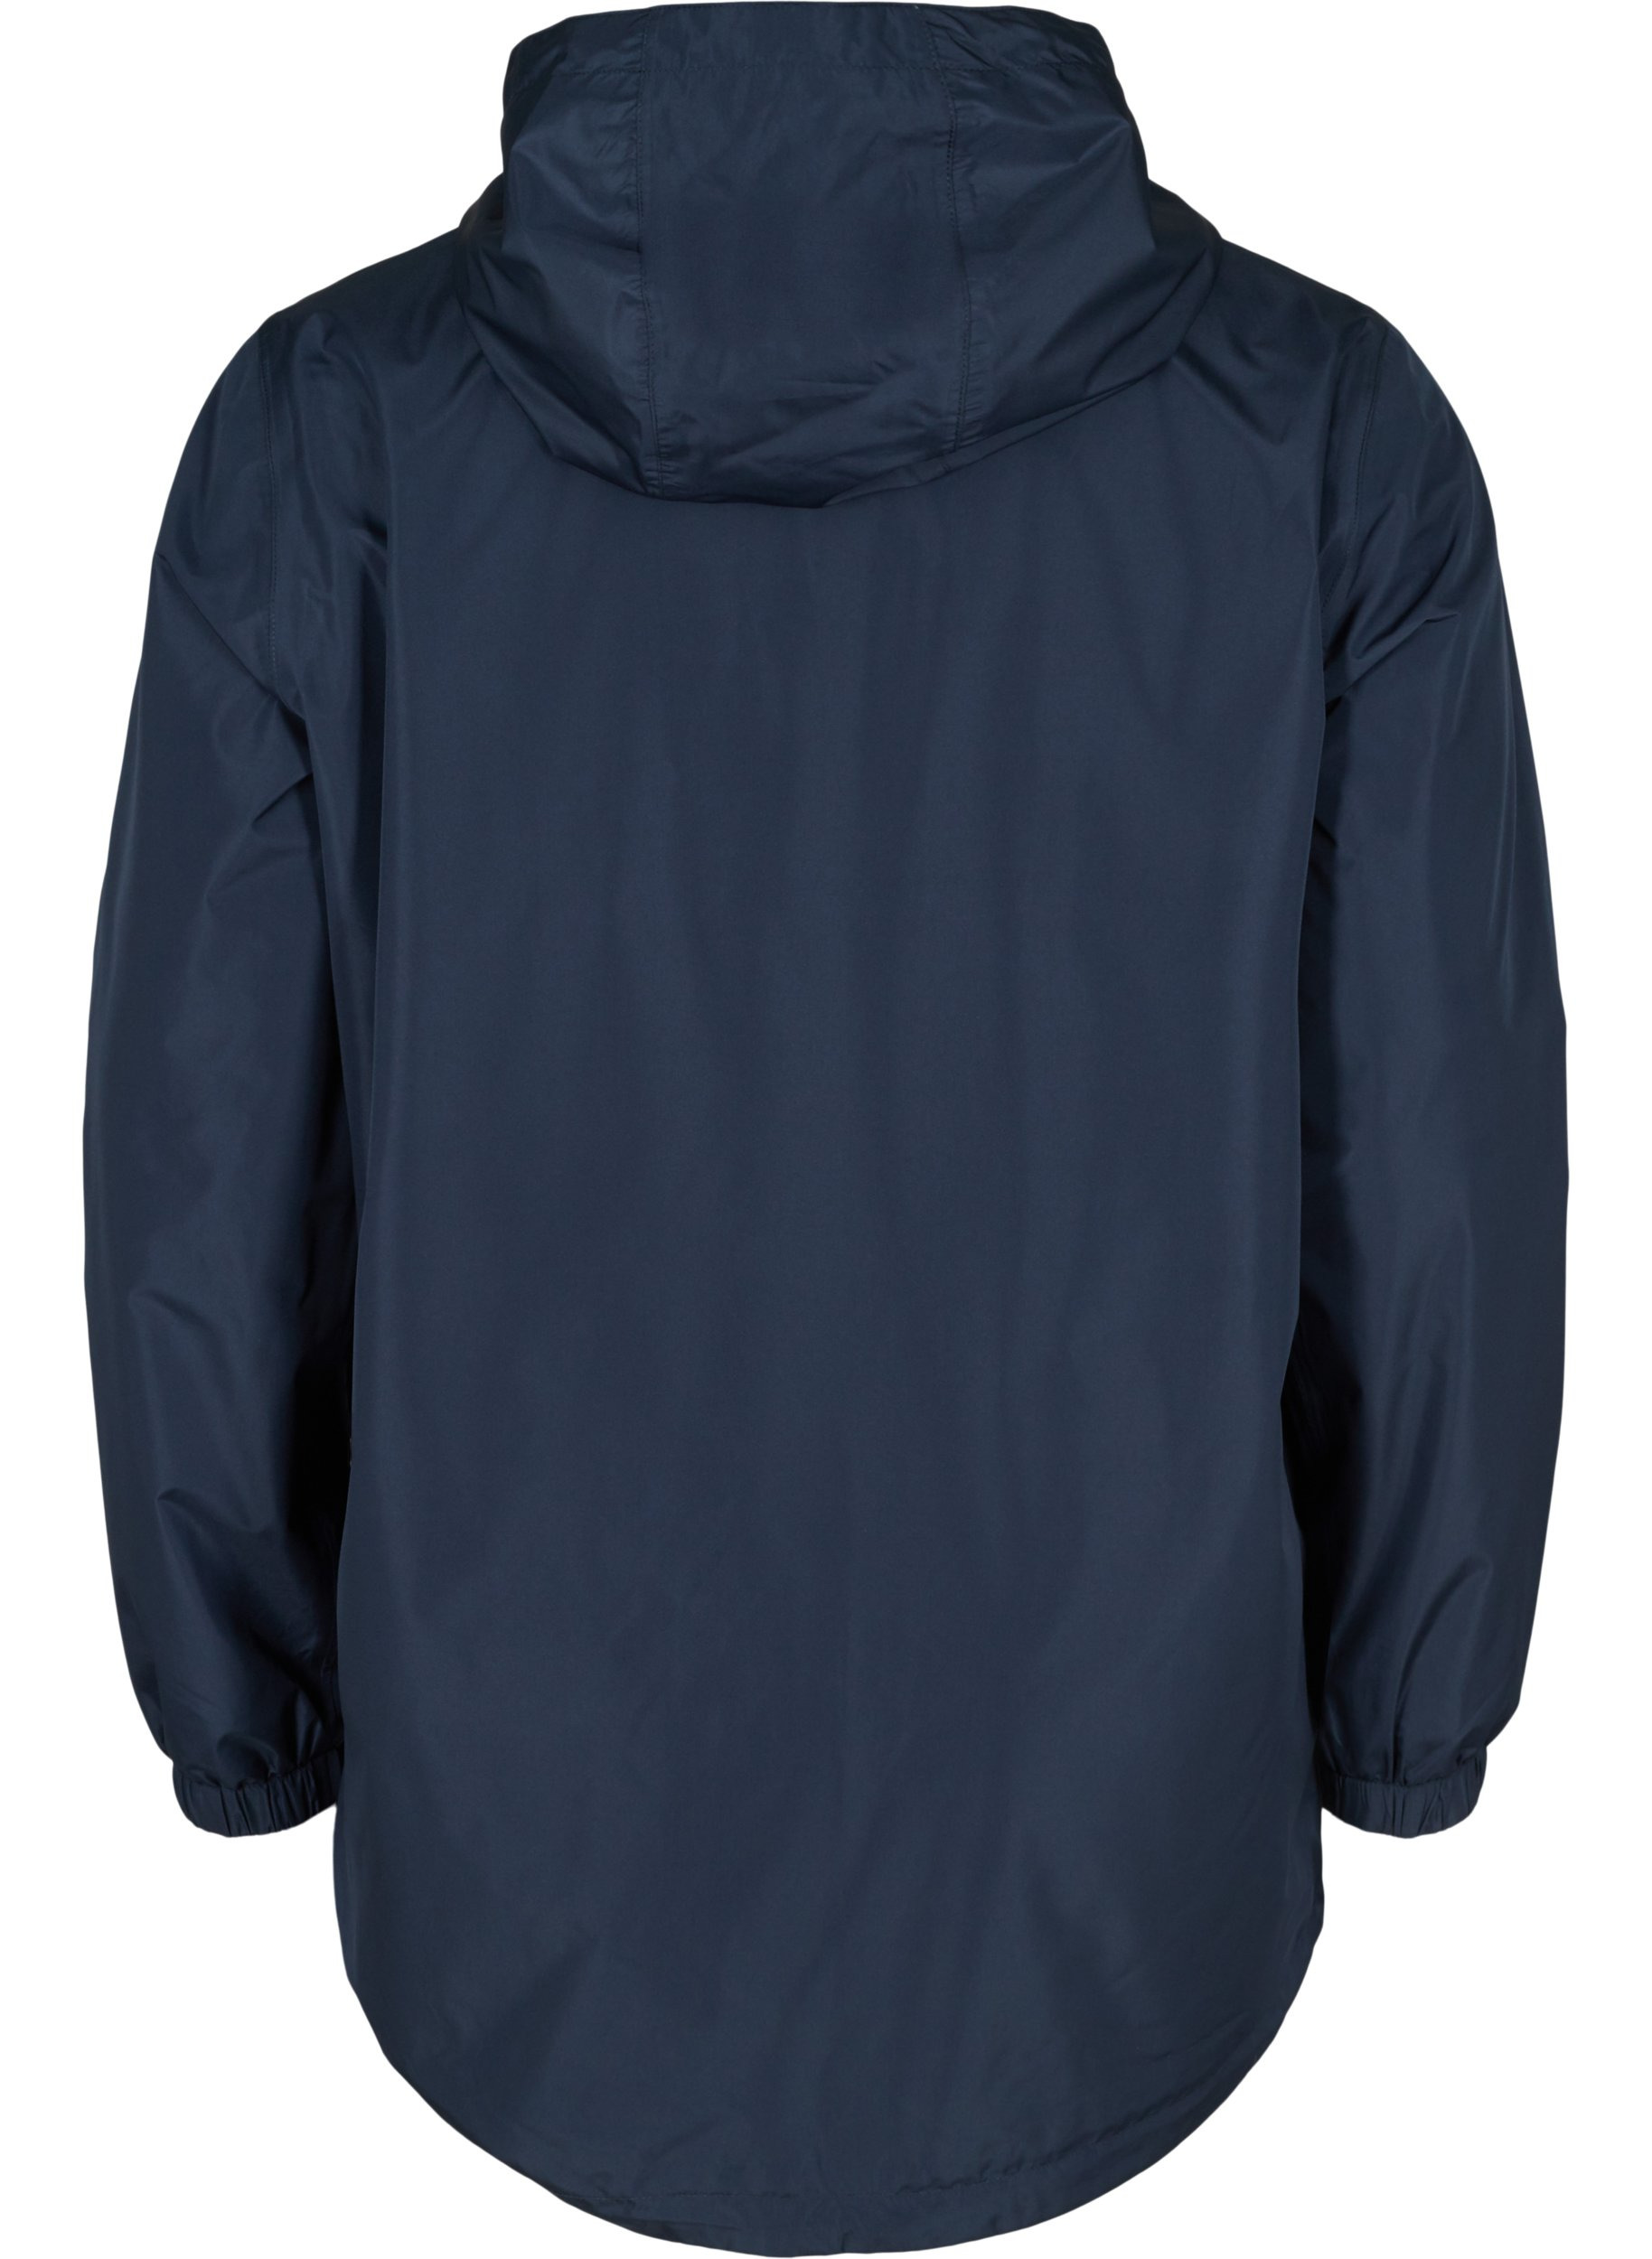 Rain jacket with adjustable bottom hem and hood, Navy Blazer, Packshot image number 1